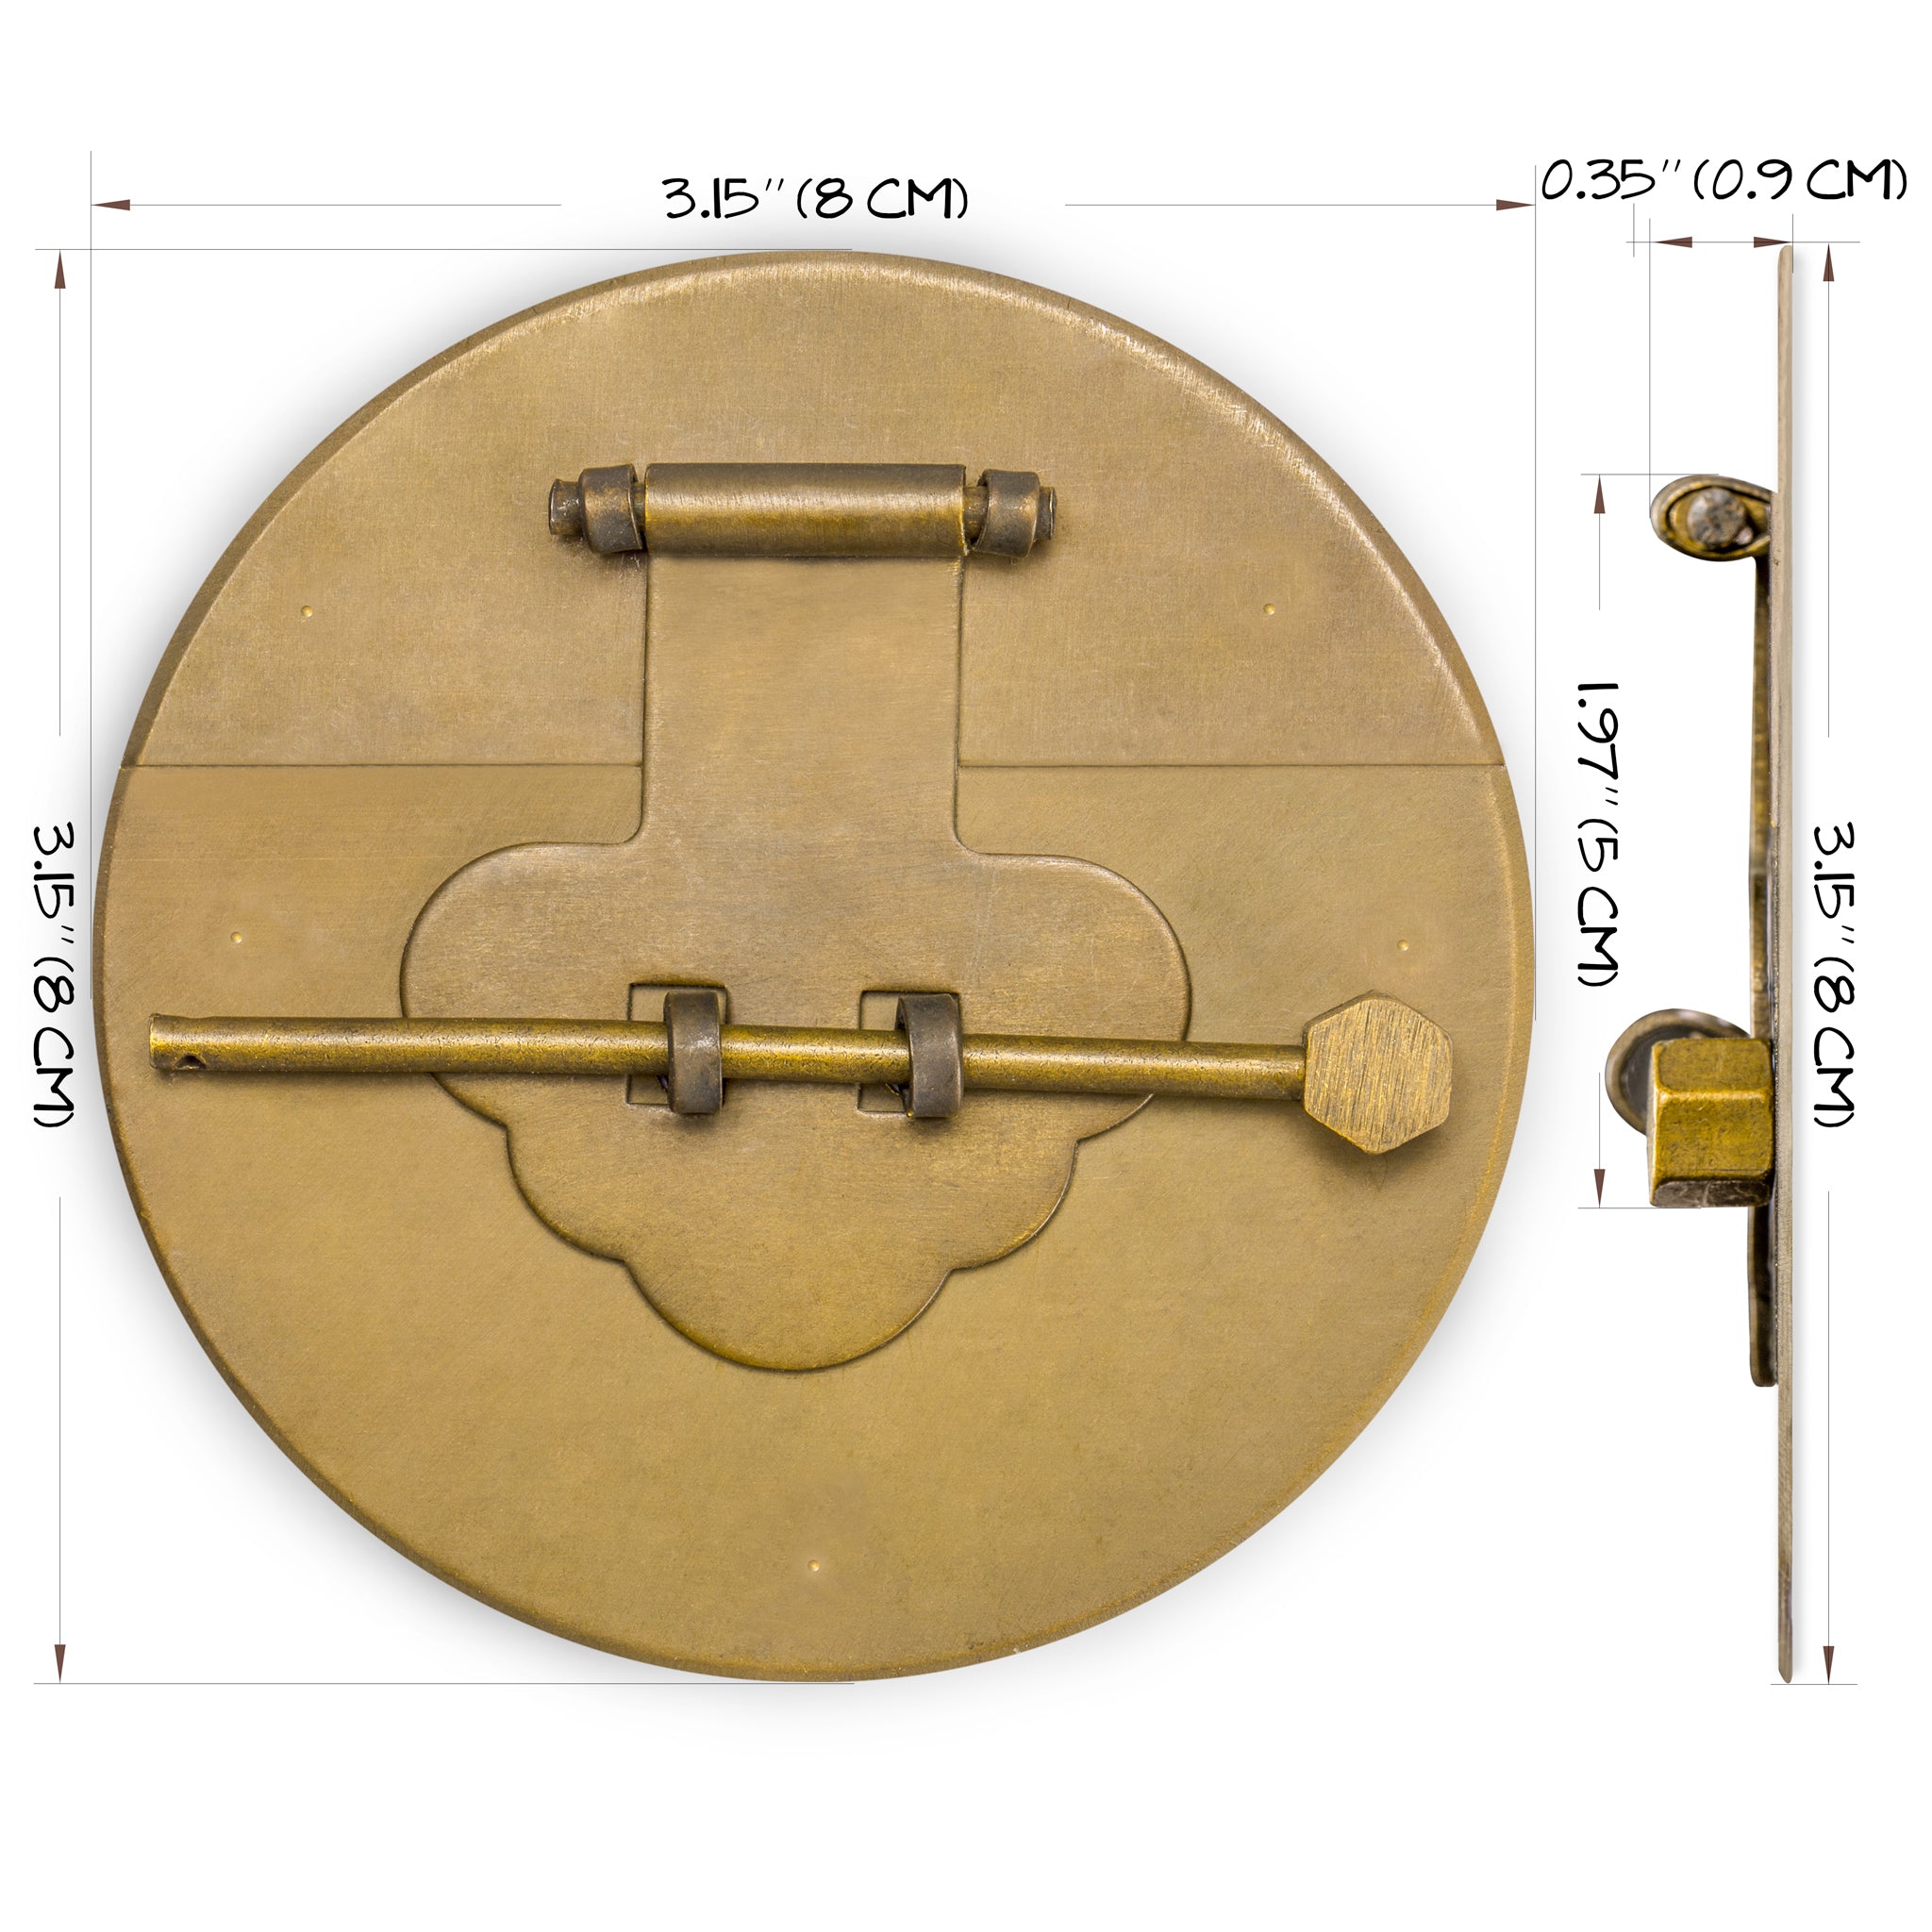 Magic Mushroom Chest Face Plate (3.1")-Chinese Brass Hardware